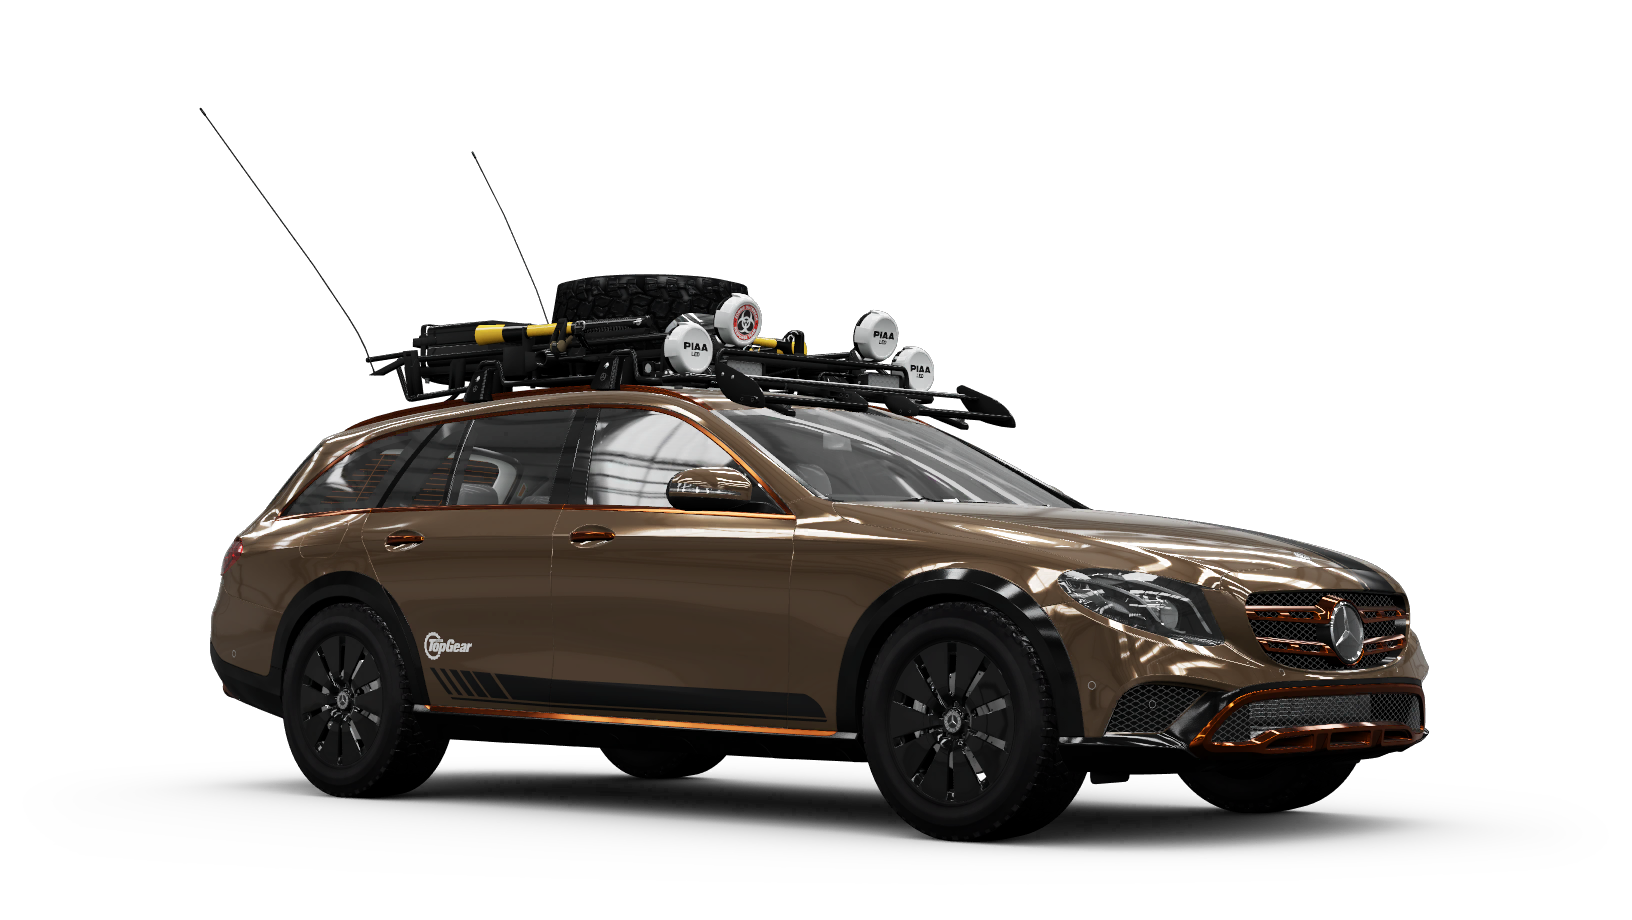 Mercedes Benz E 350 D 4matic Terrain Project E At Forza Wiki Fandom